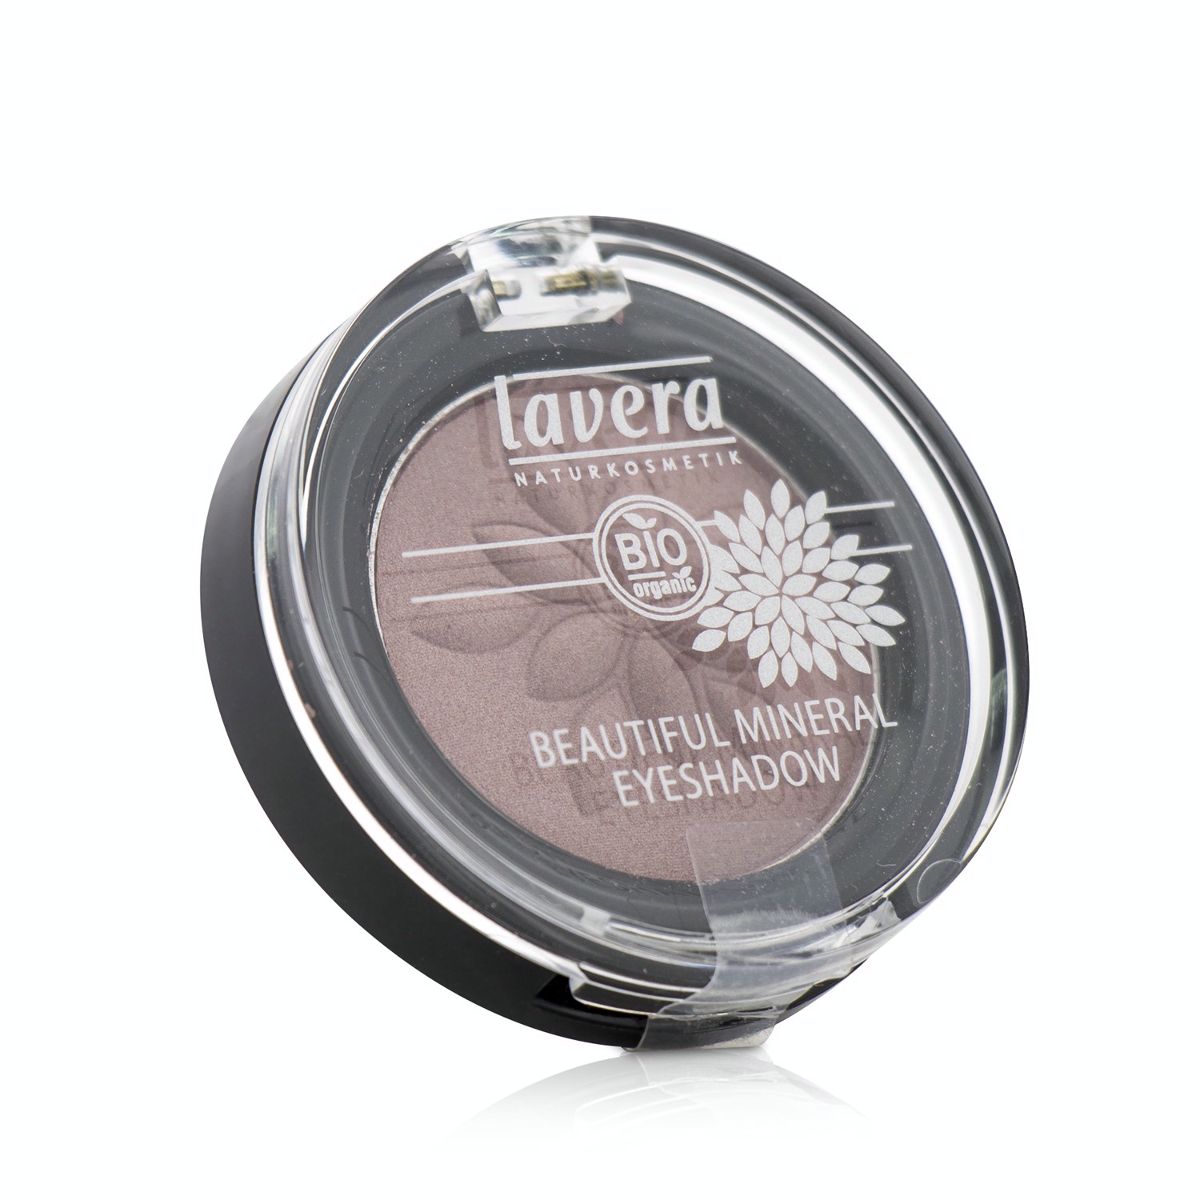 Beautiful Mineral Eyeshadow - # 24 Mattn Blossom Lavera Image